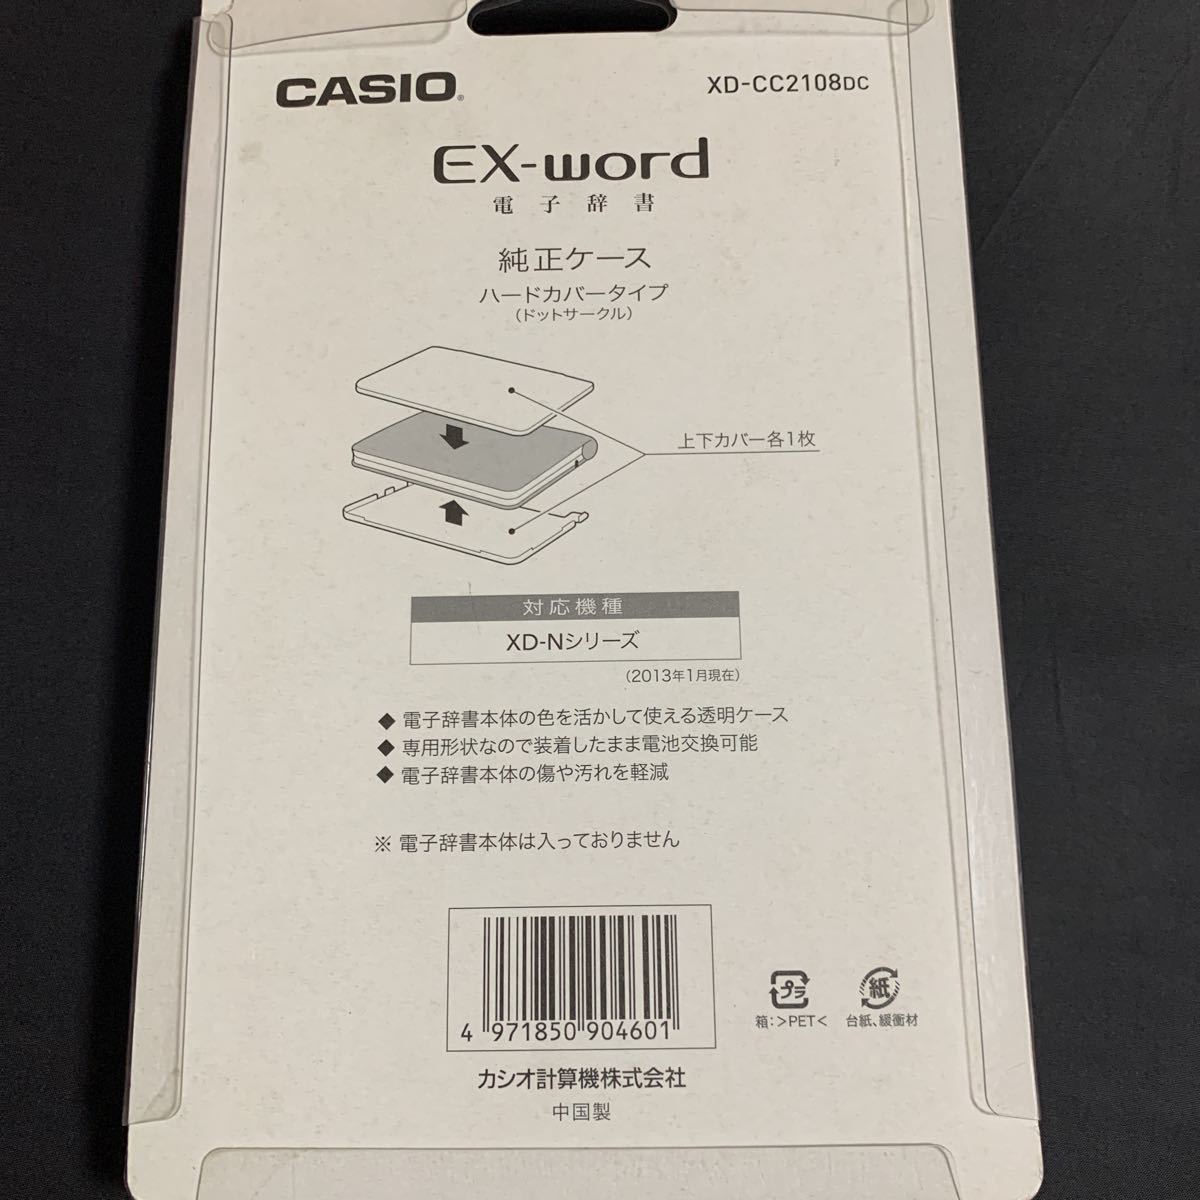  new goods CASIO original computerized dictionary EX-word for original case hard cover type XD-CC2108 DC ②